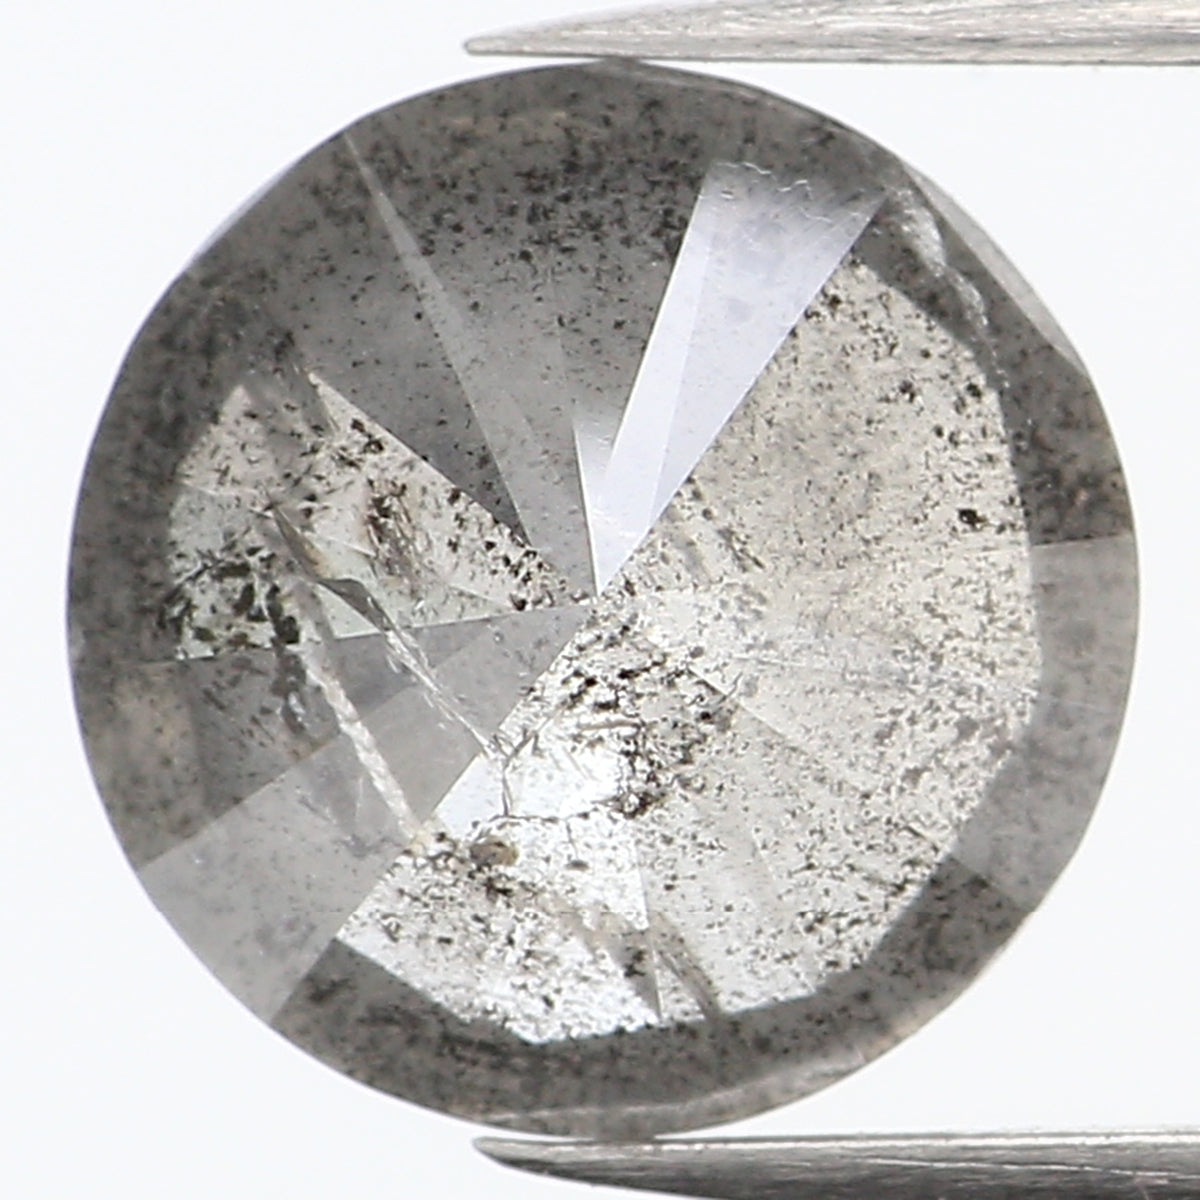 1.83 CT Natural Loose Round Shape Diamond Black Grey Color Round Cut Diamond 7.70 MM Salt And Pepper Round Brilliant Cut Diamond QL903